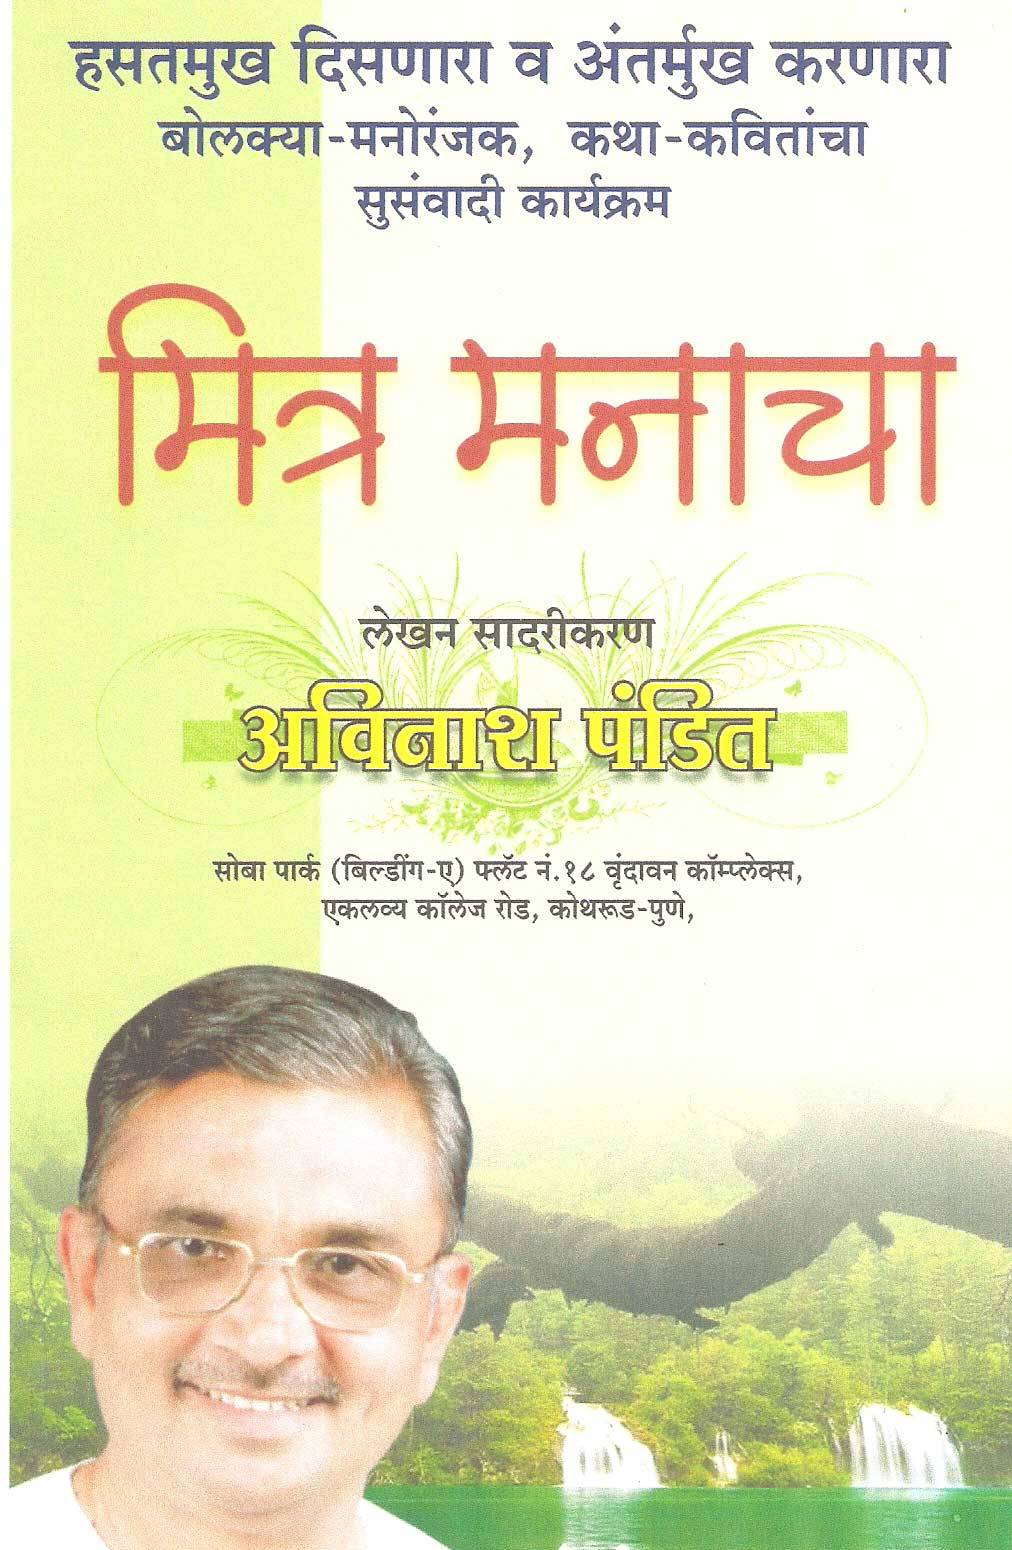 Mitra Manacha program by Avinash Pandit